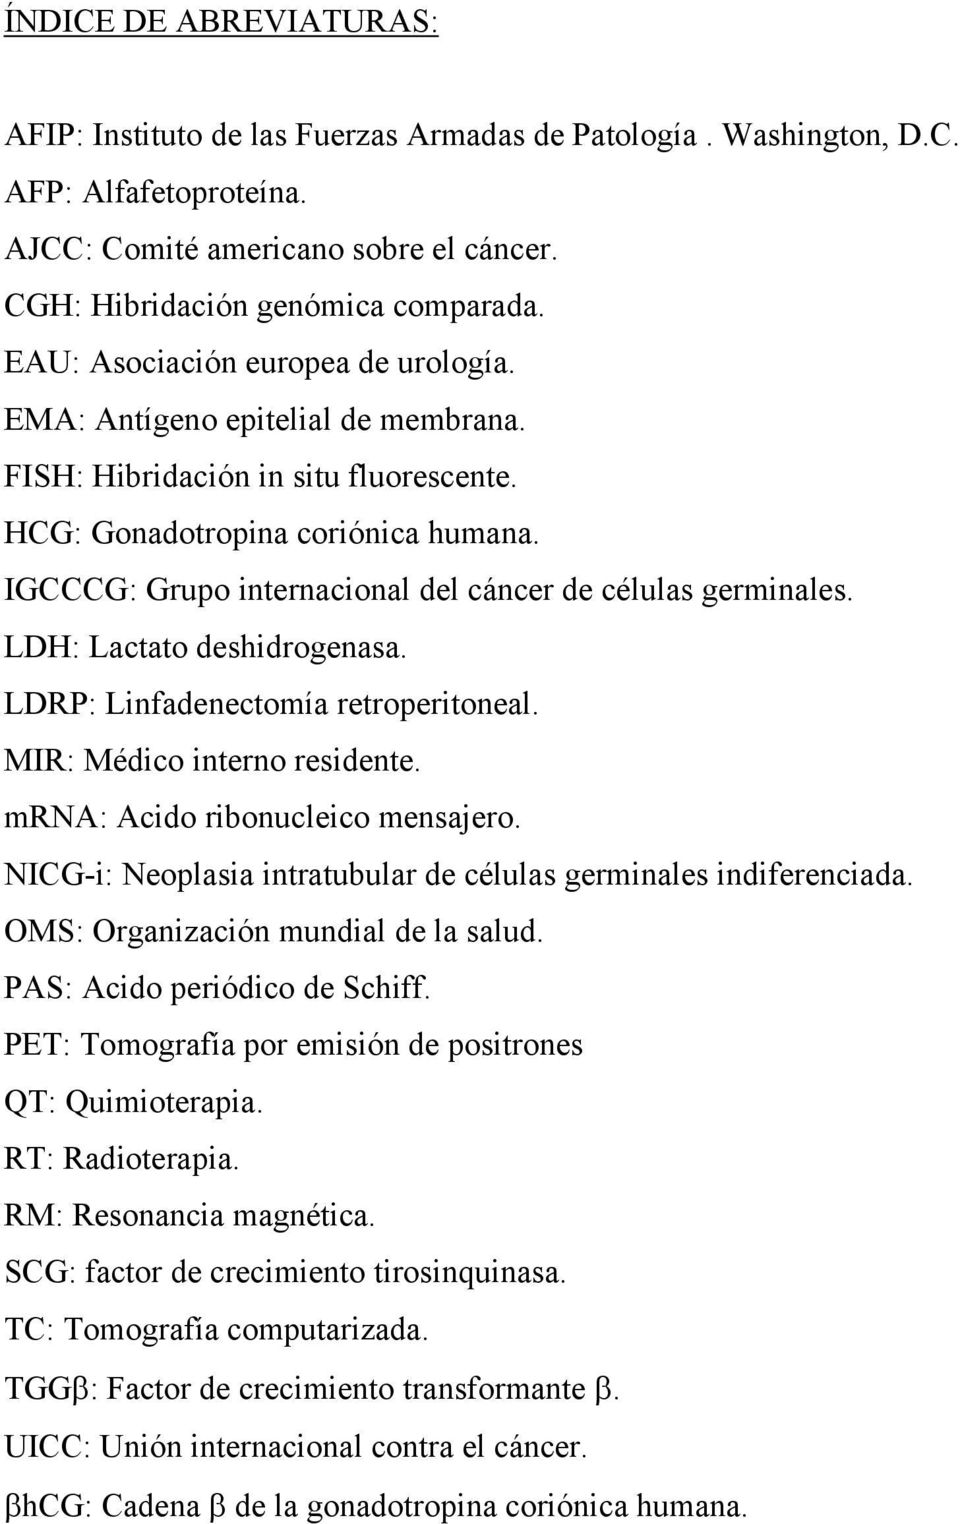 IGCCCG: Grupo internacional del cáncer de células germinales. LDH: Lactato deshidrogenasa. LDRP: Linfadenectomía retroperitoneal. MIR: Médico interno residente. mrna: Acido ribonucleico mensajero.